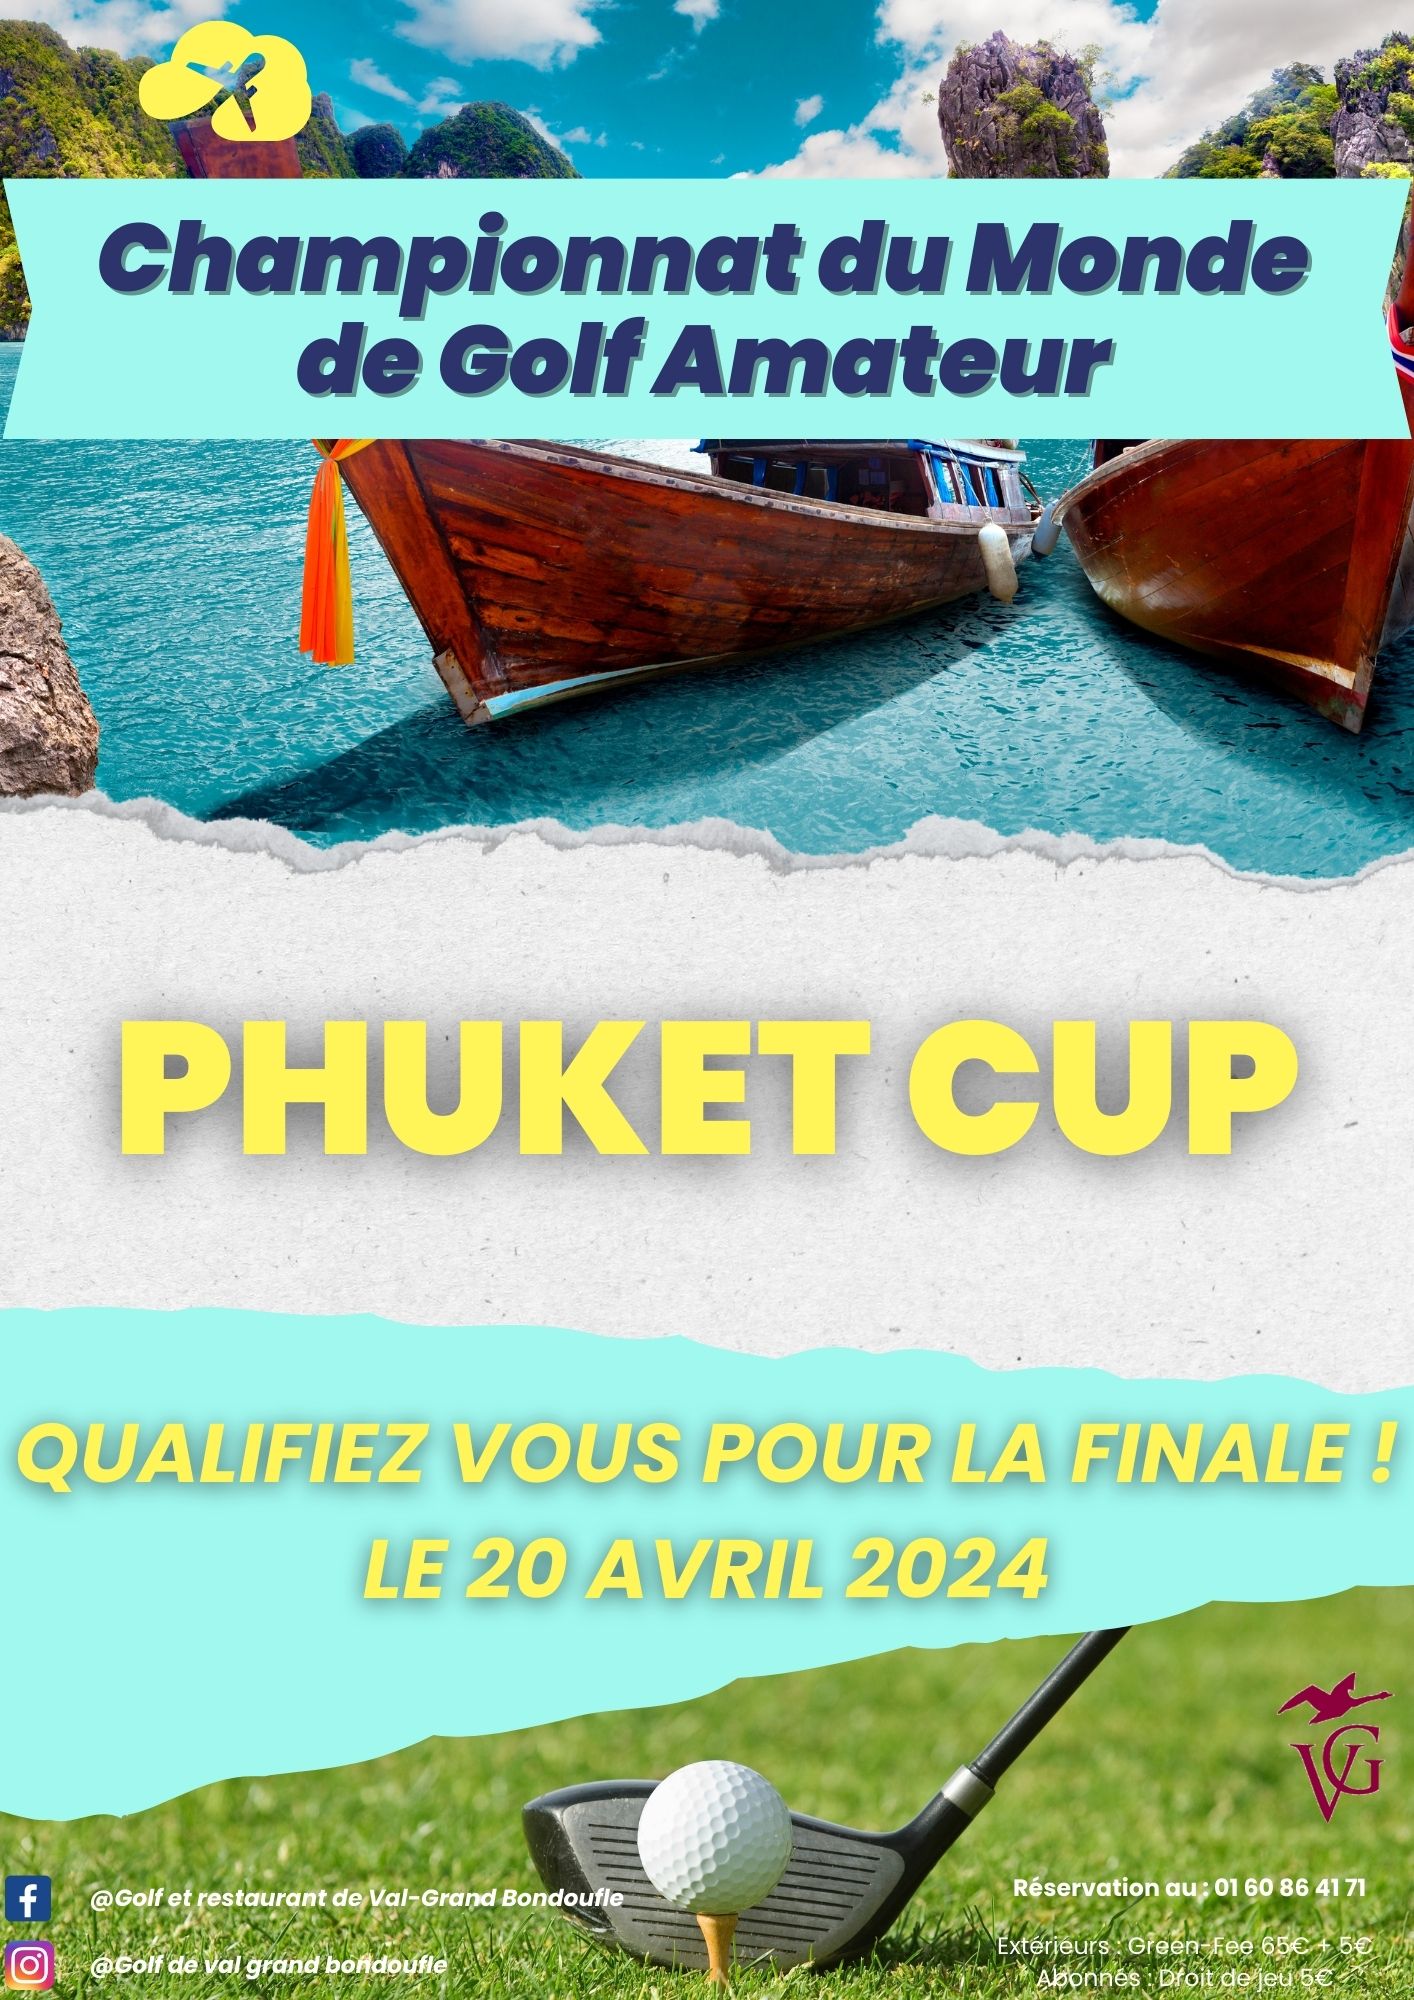 Phuket Cup !